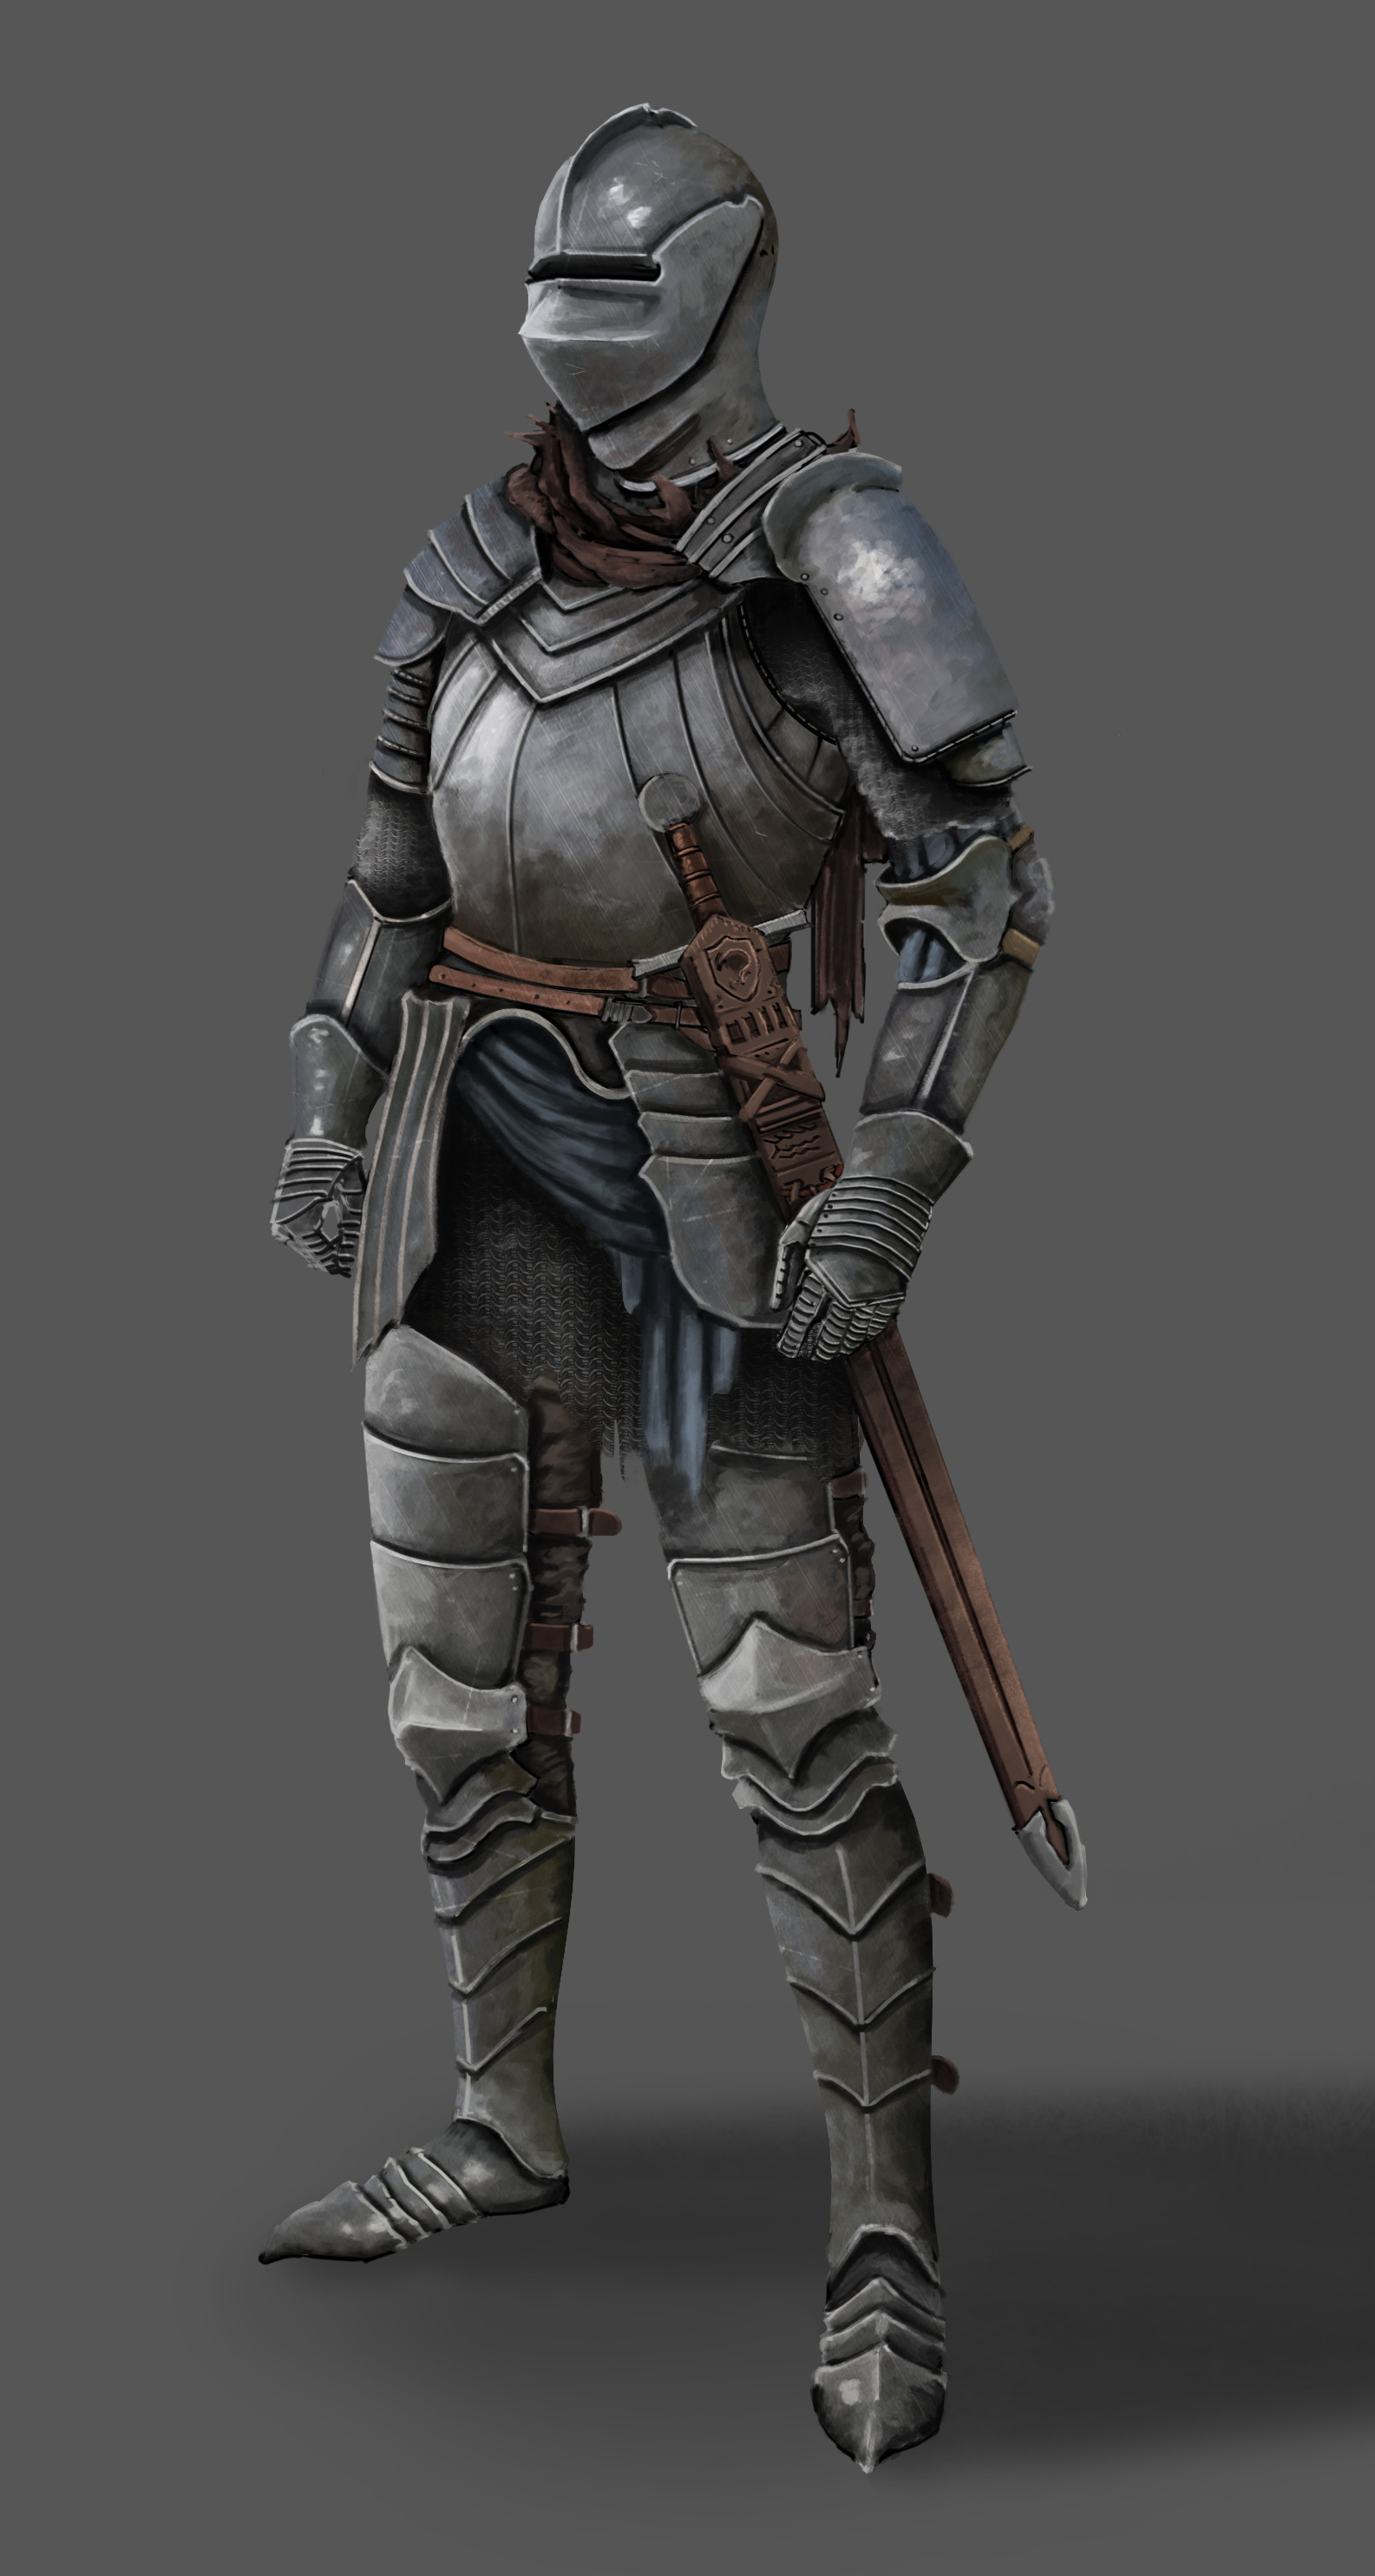 ArtStation - Knight armour design 1, Kamil Sroka